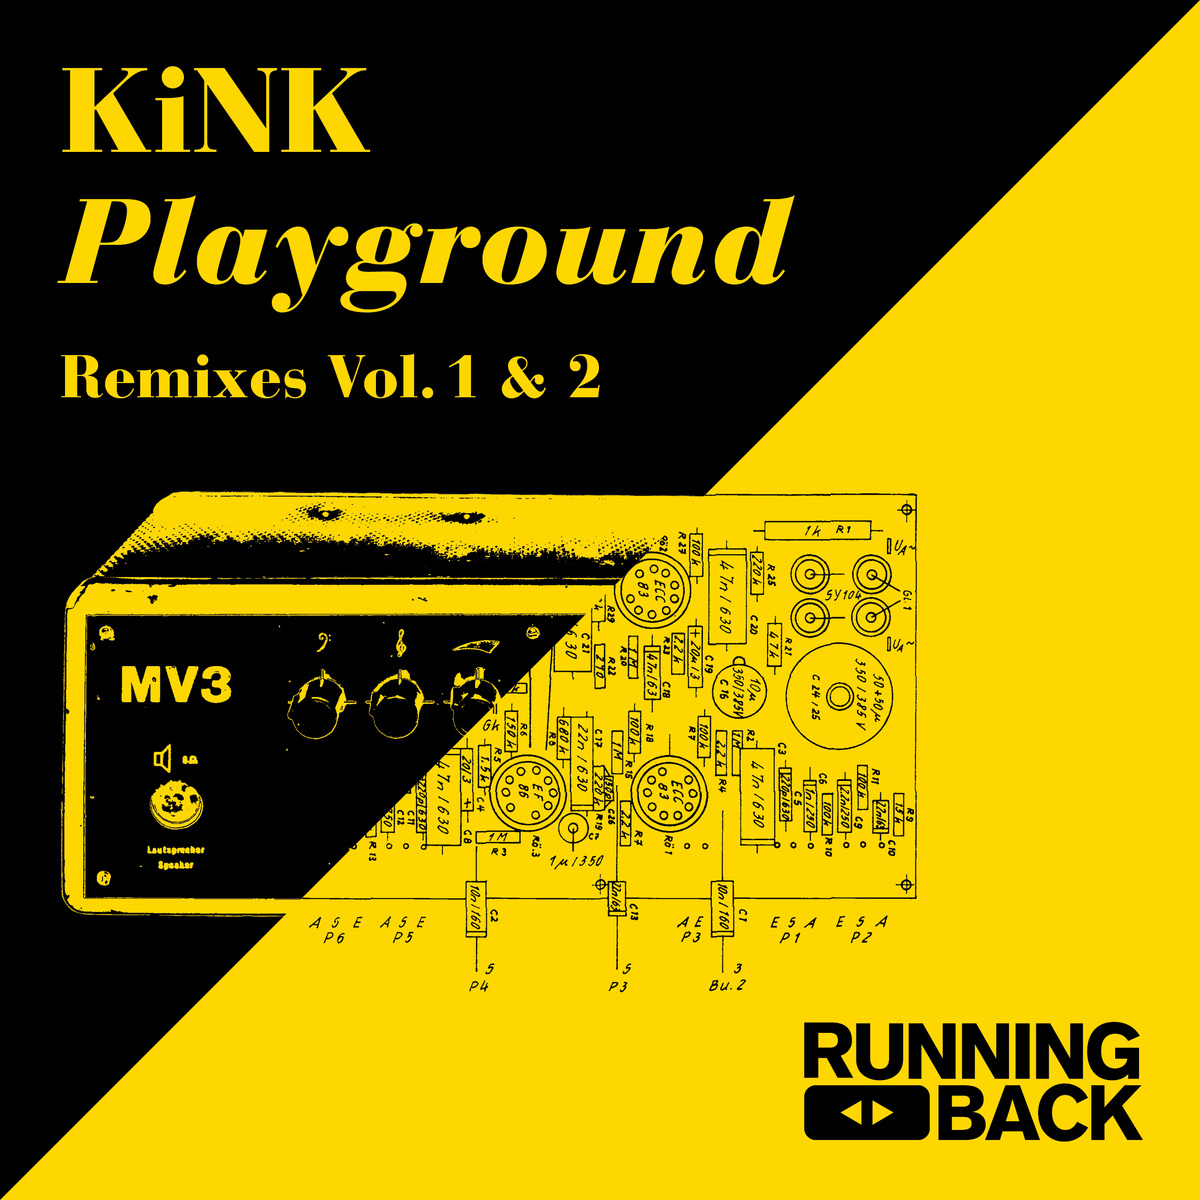 Kink - Playground Remixes Vol. 1 & 2 / Running Back